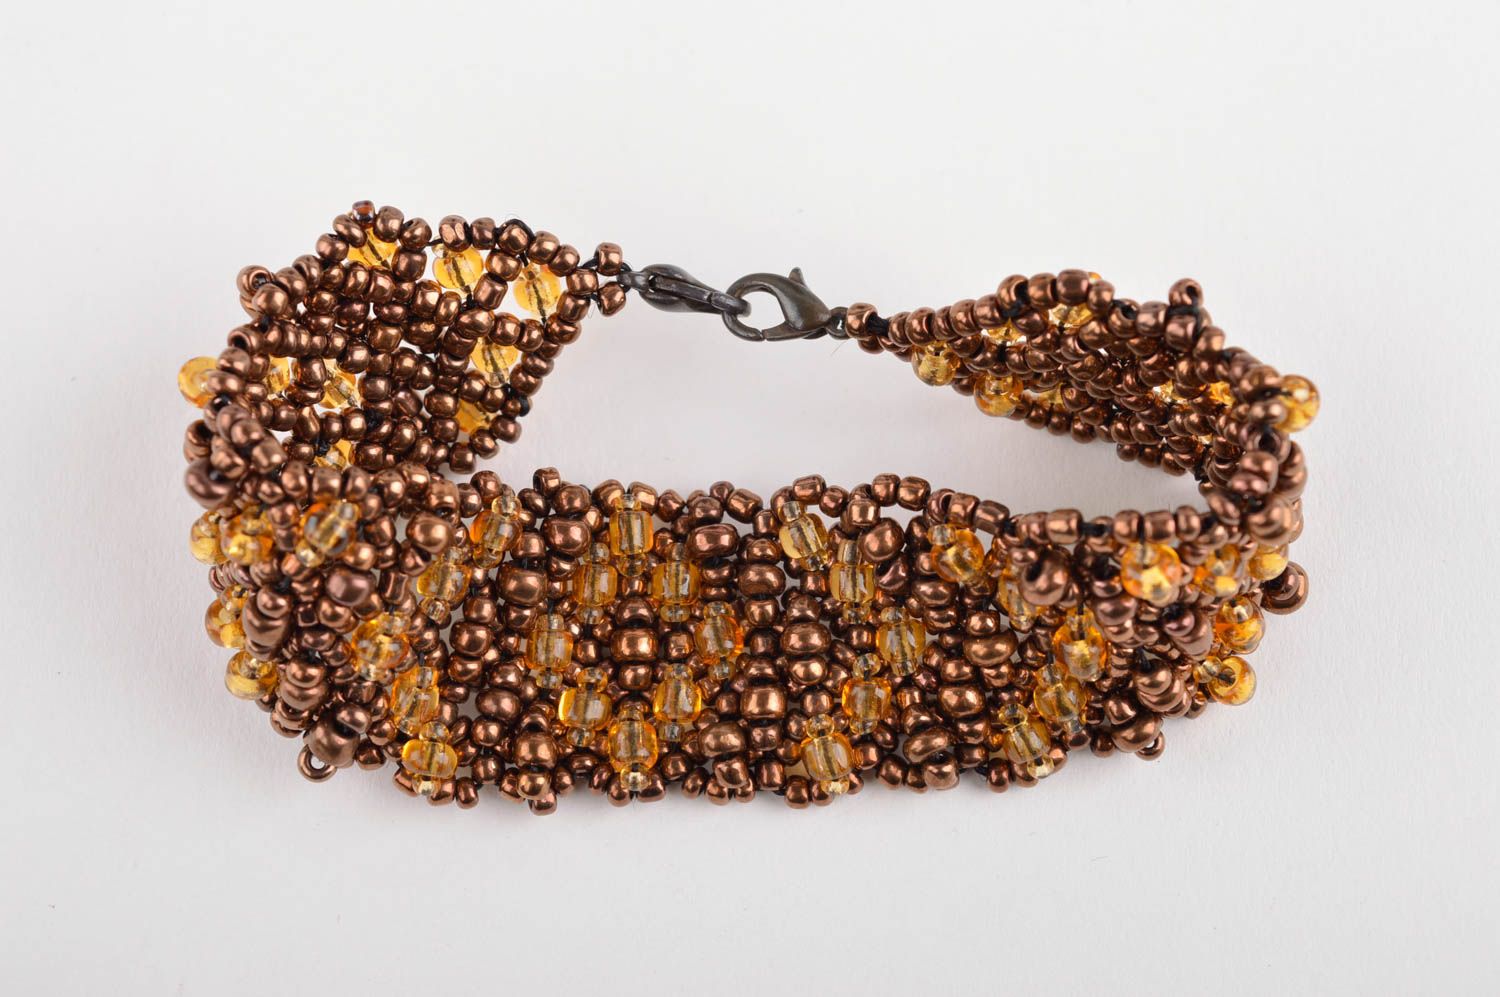 Handmade beaded necklace wrist bracelet designs costume jewelry set ideas photo 5